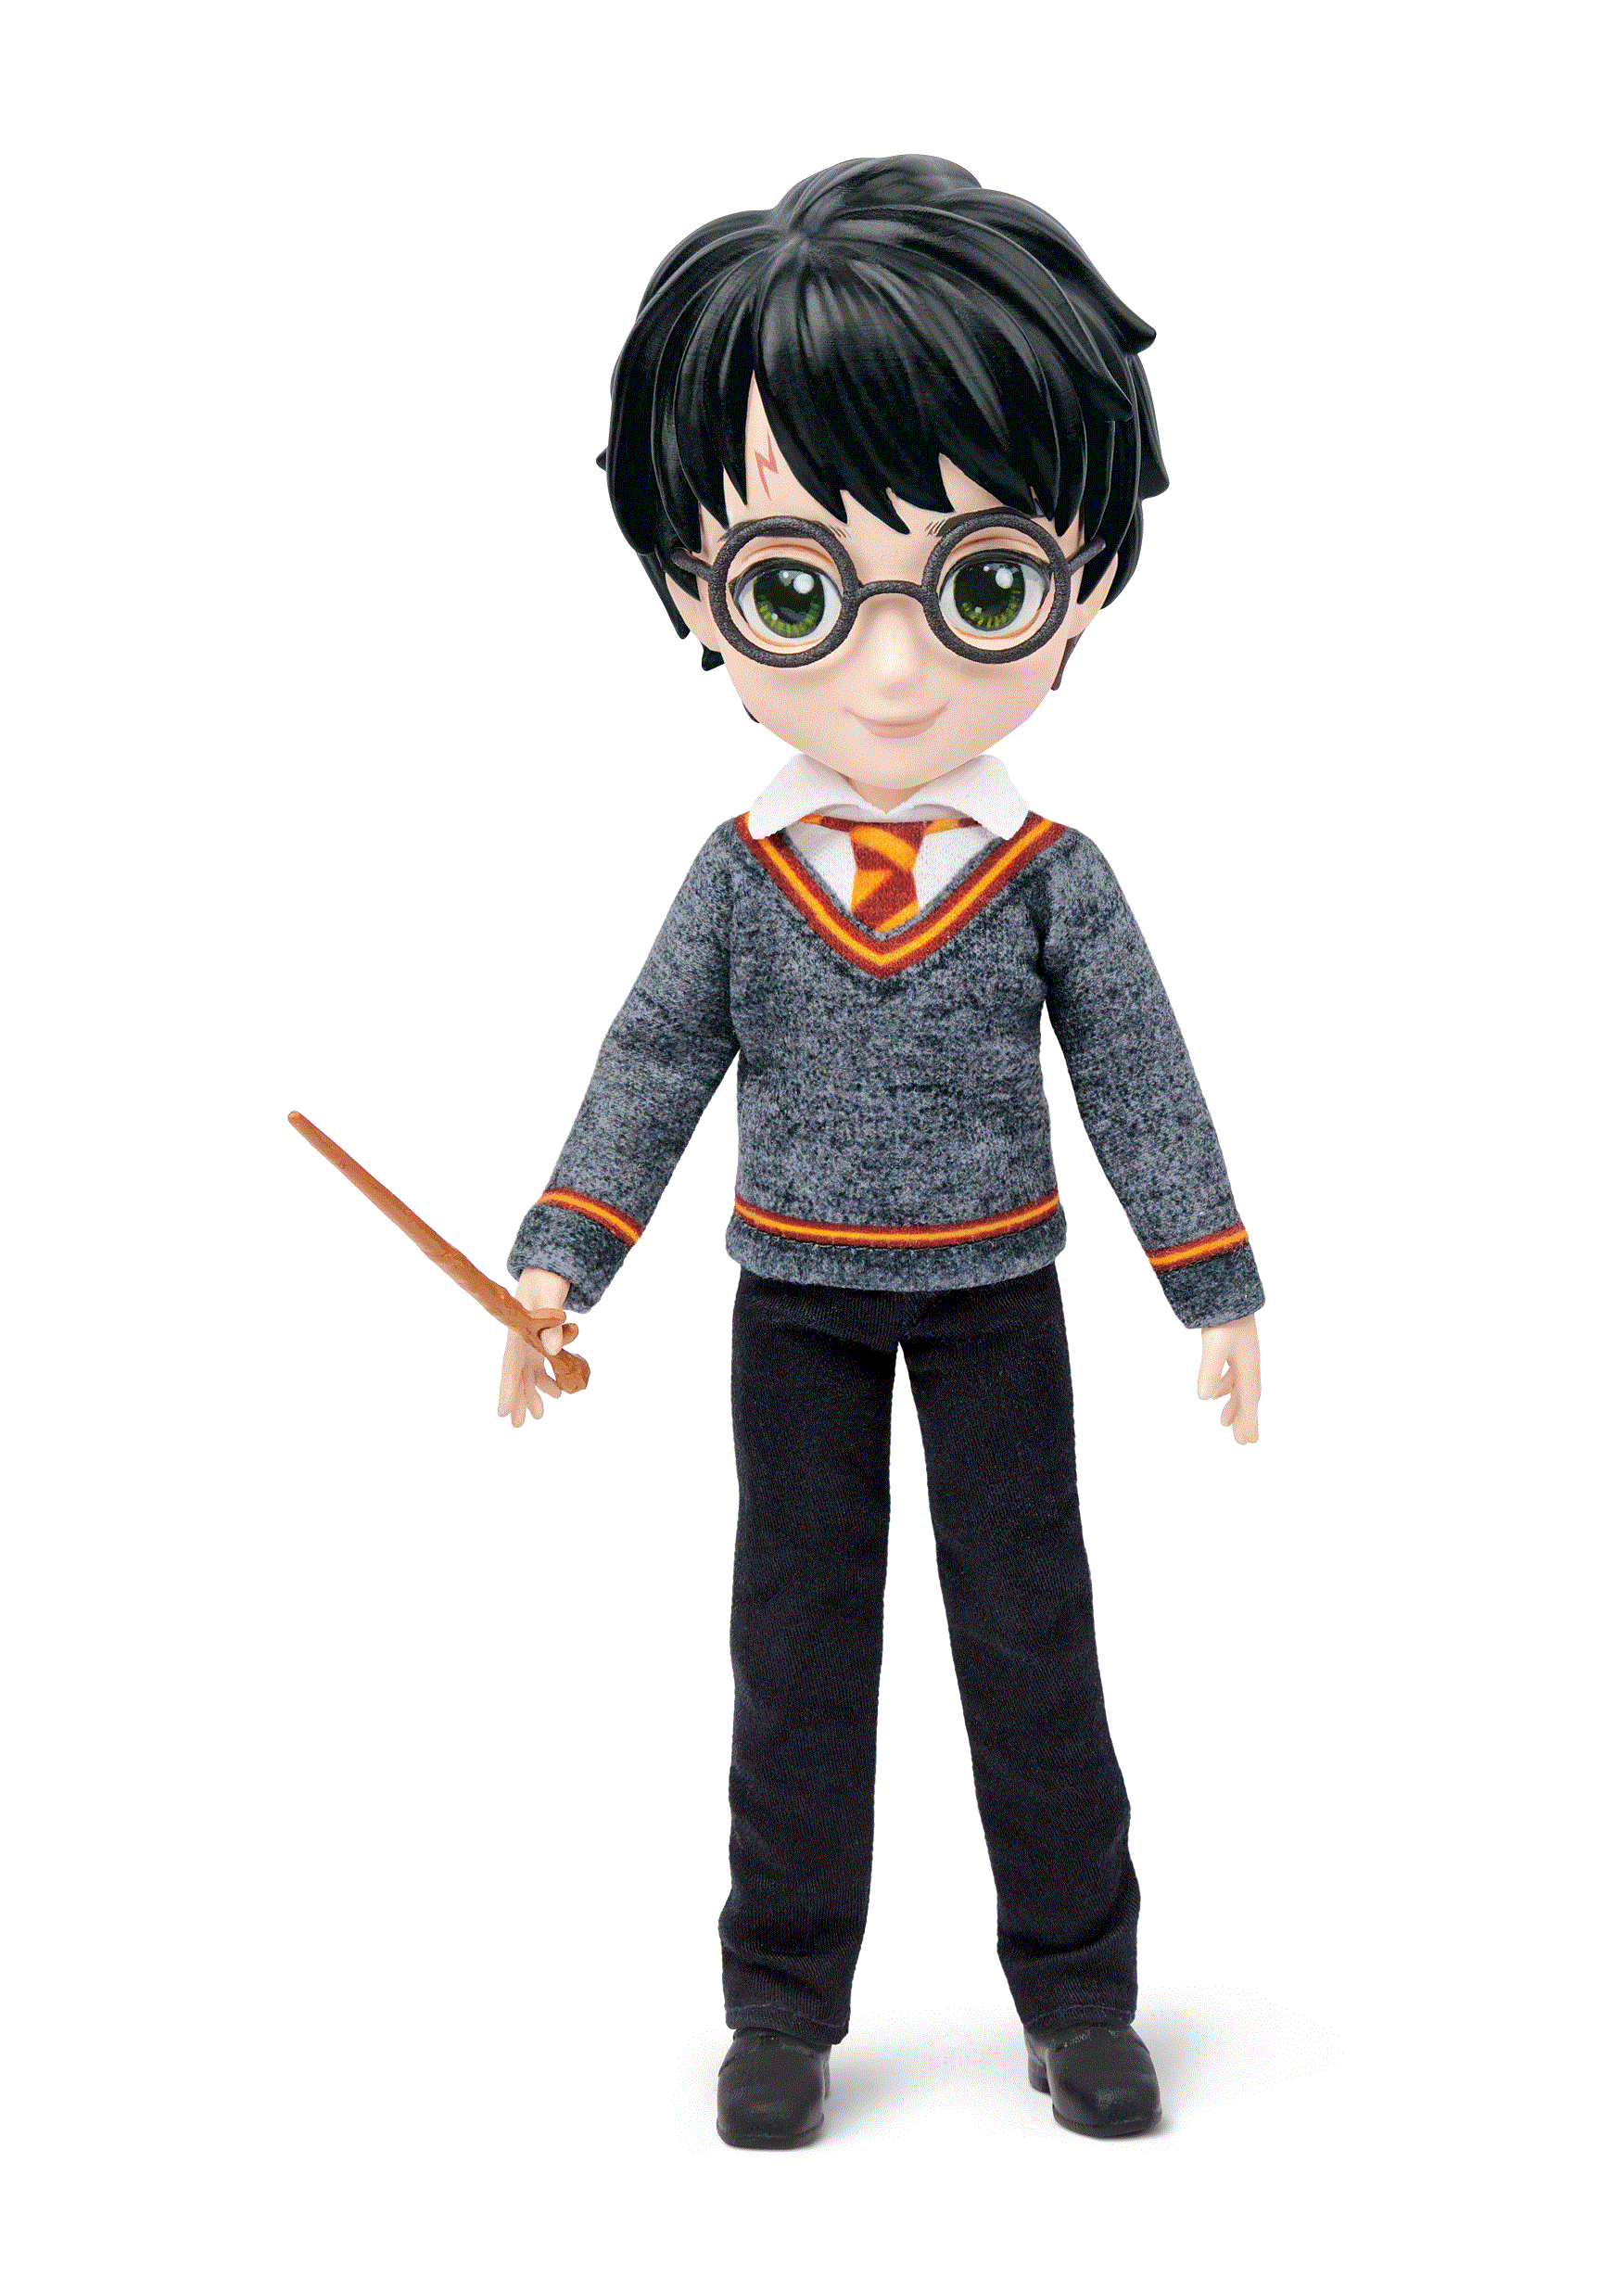 Fashion Doll: Harry Potter- Harry Potter 8 inch